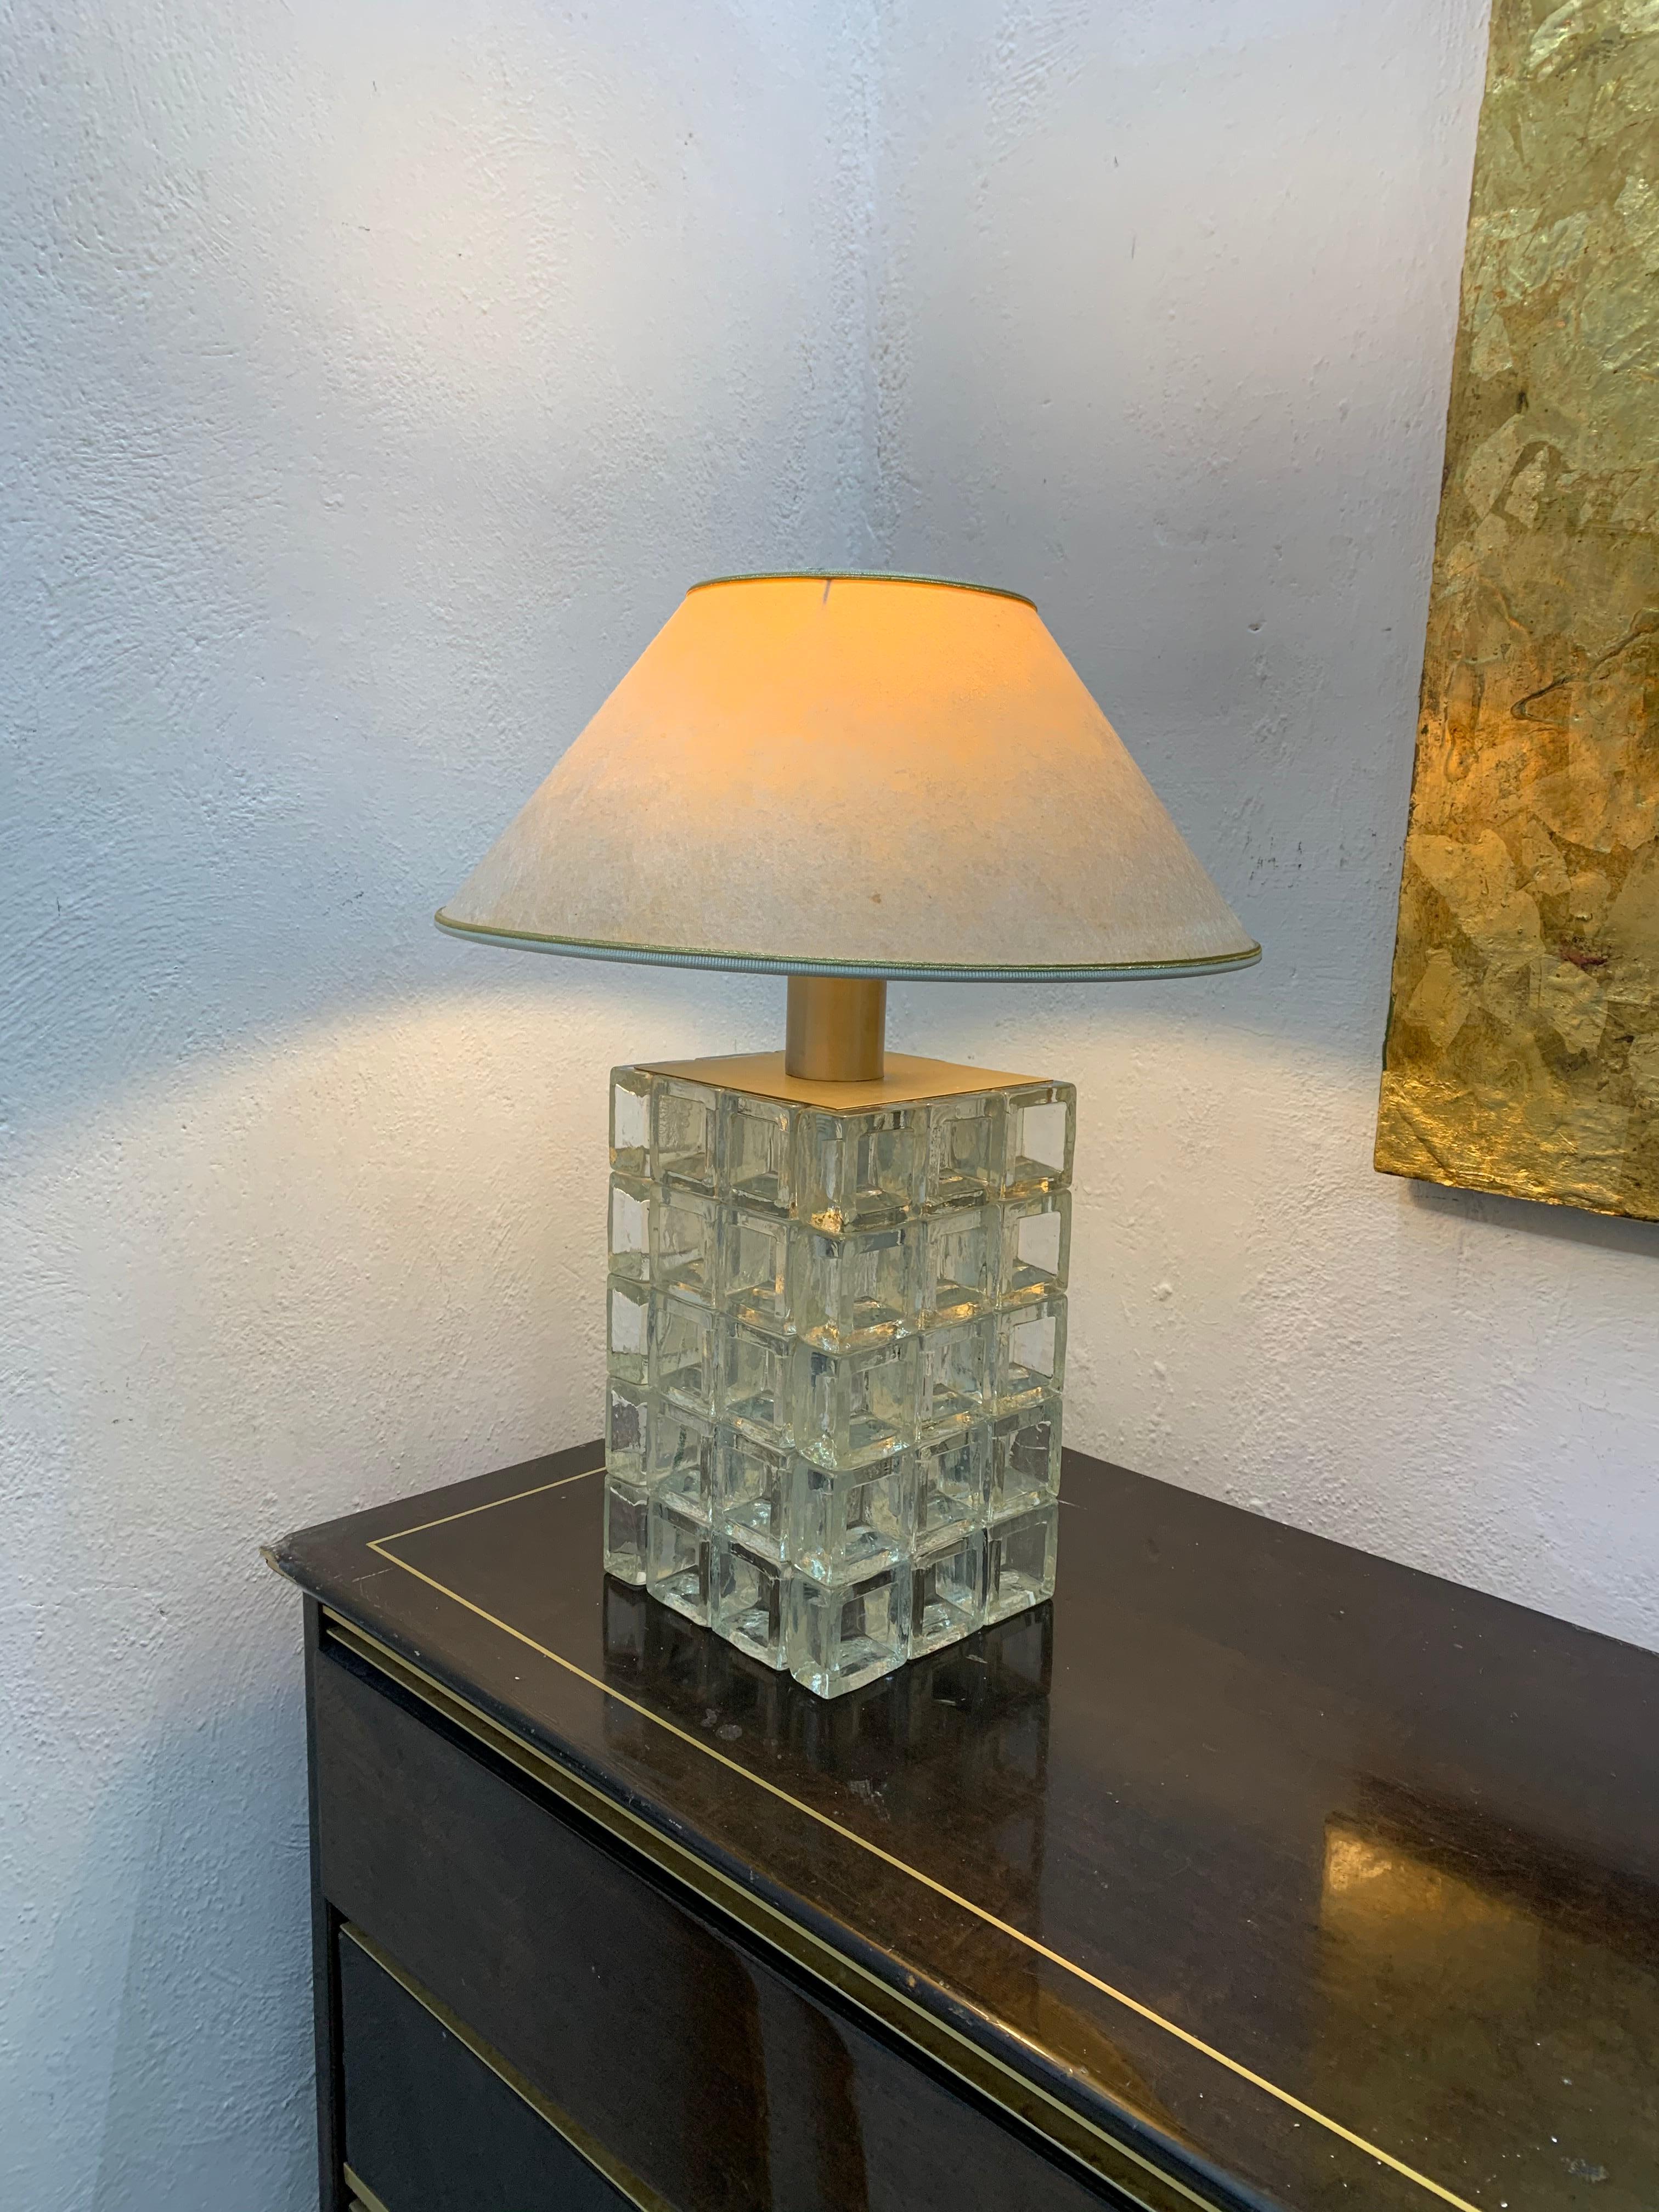 Italian Mid-Century Modern Table Lamp by Albano Poli, Poliarte, Murano, Italy circa 1960 For Sale